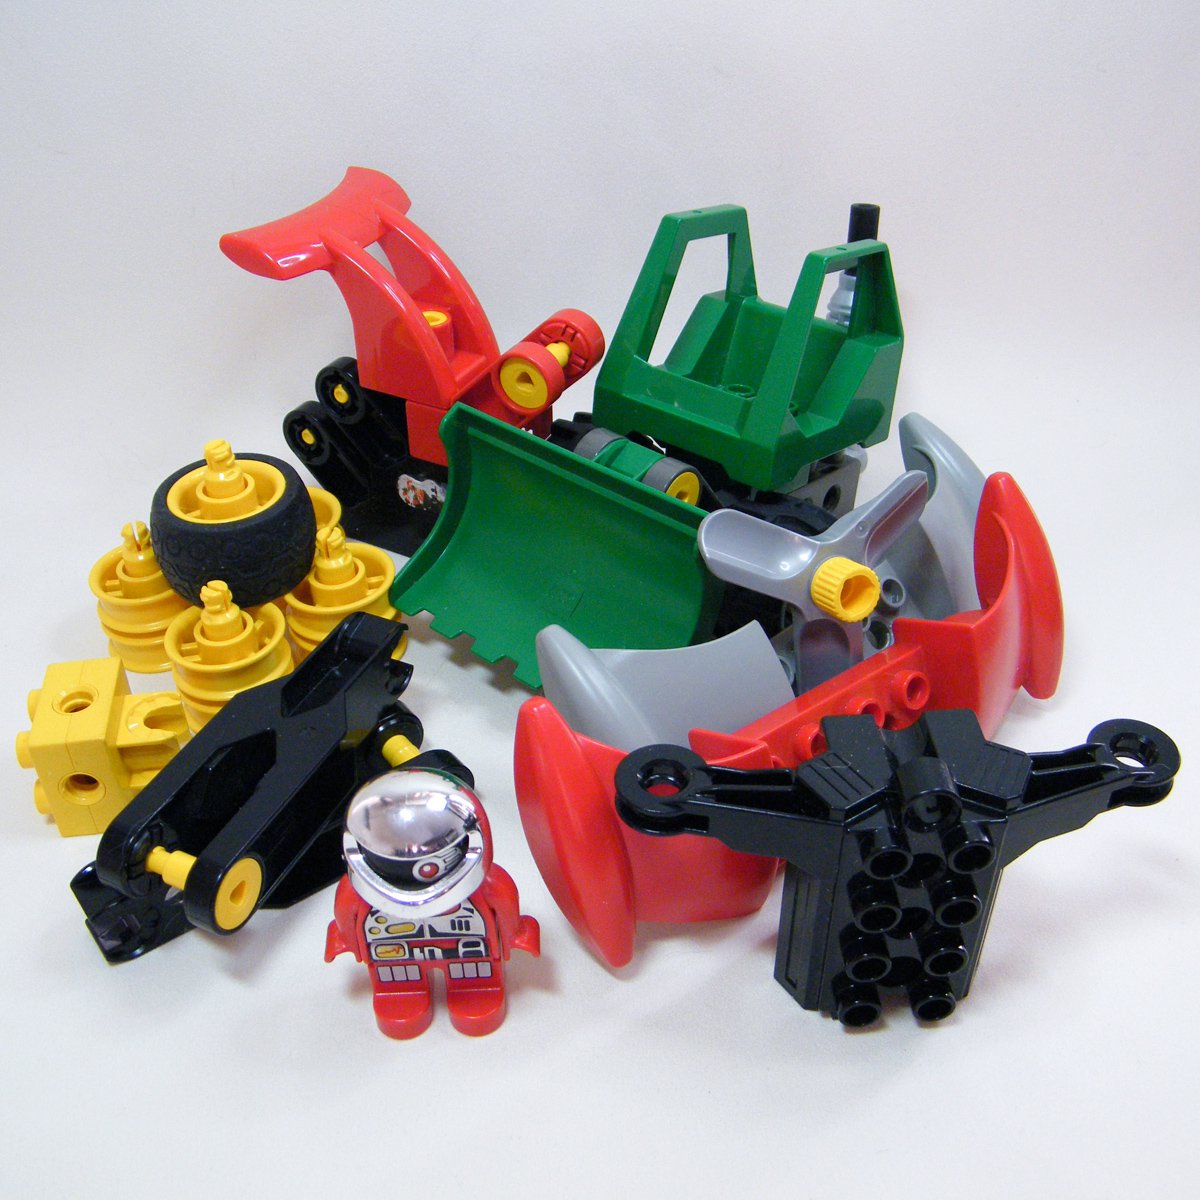 Lego Duplo 3587 MINI DOZER, 3586 Small Plane and 2916 MyBot Mini Figure